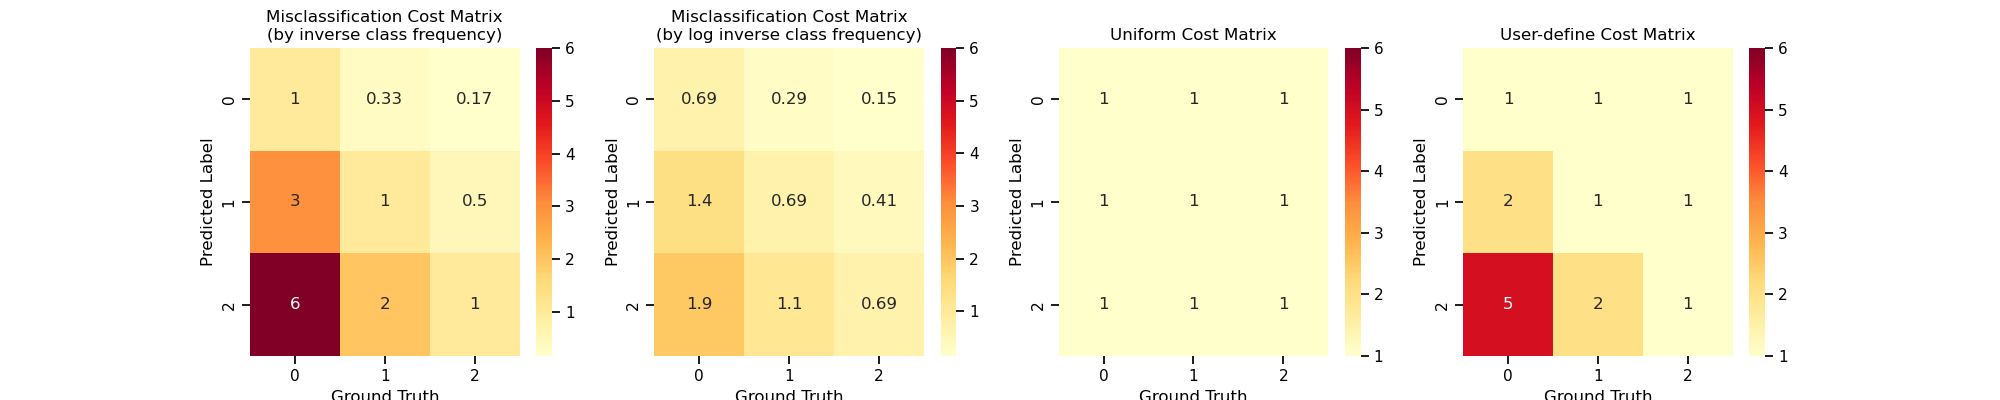 Misclassification Cost Matrix (by inverse class frequency), Misclassification Cost Matrix (by log inverse class frequency), Uniform Cost Matrix, User-define Cost Matrix